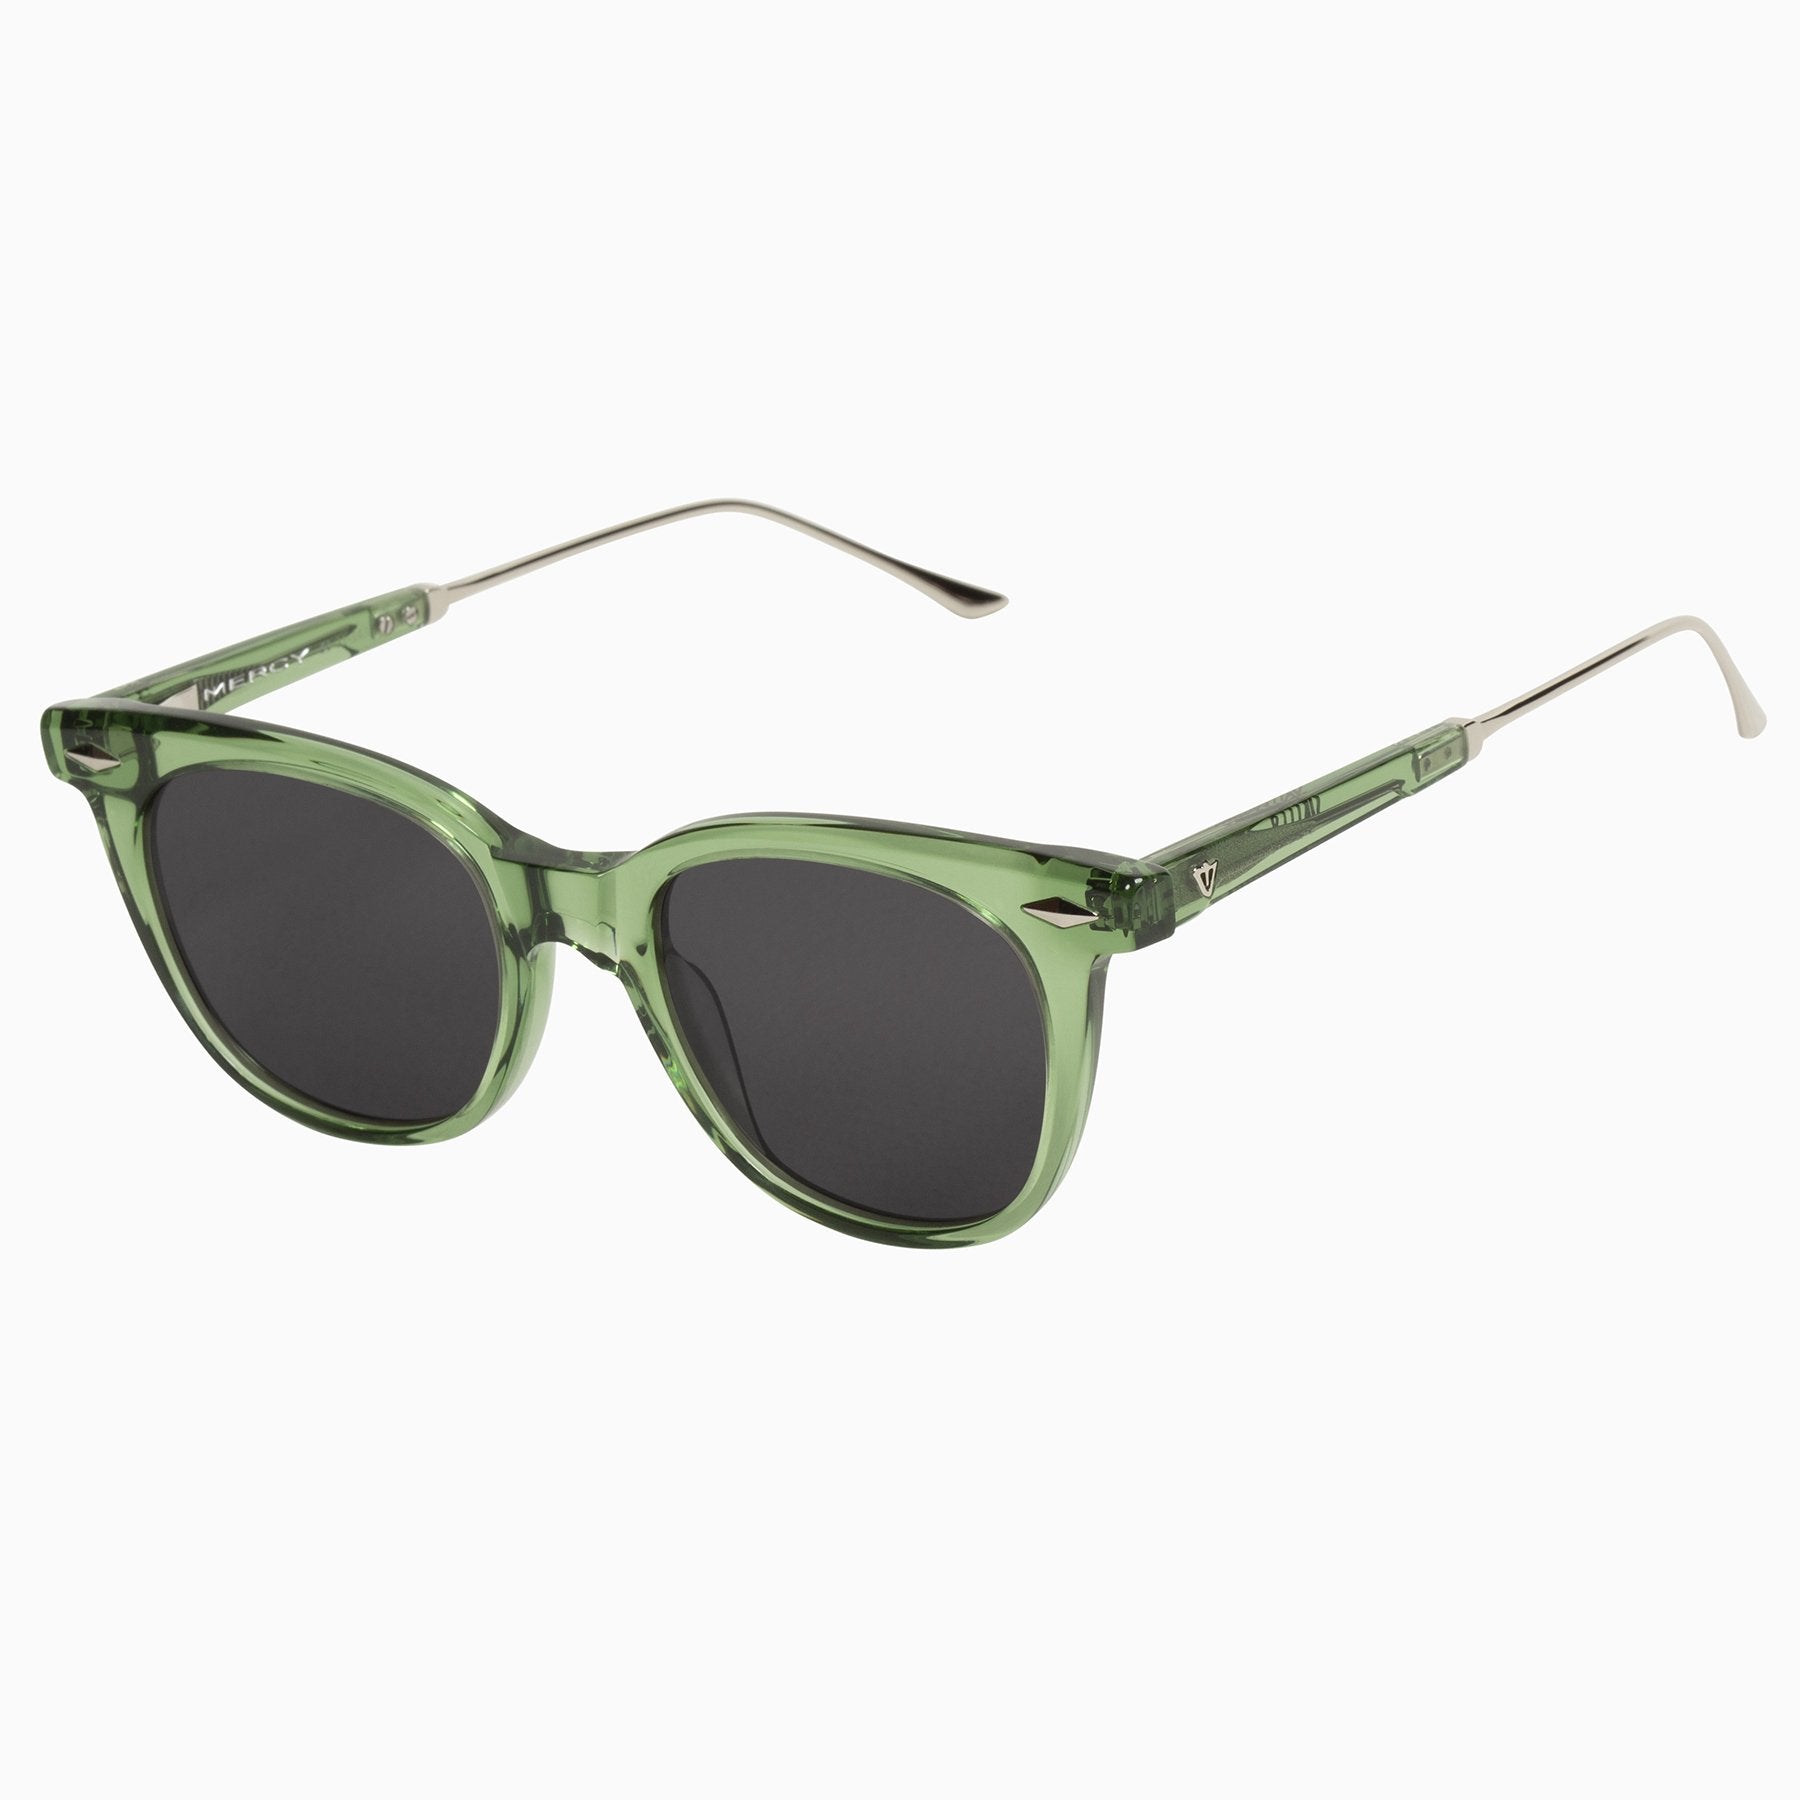 Valley Eyewear | Mercy | Sunglasses - Bottle Green w. Silver Metal Trim / Clear Lens